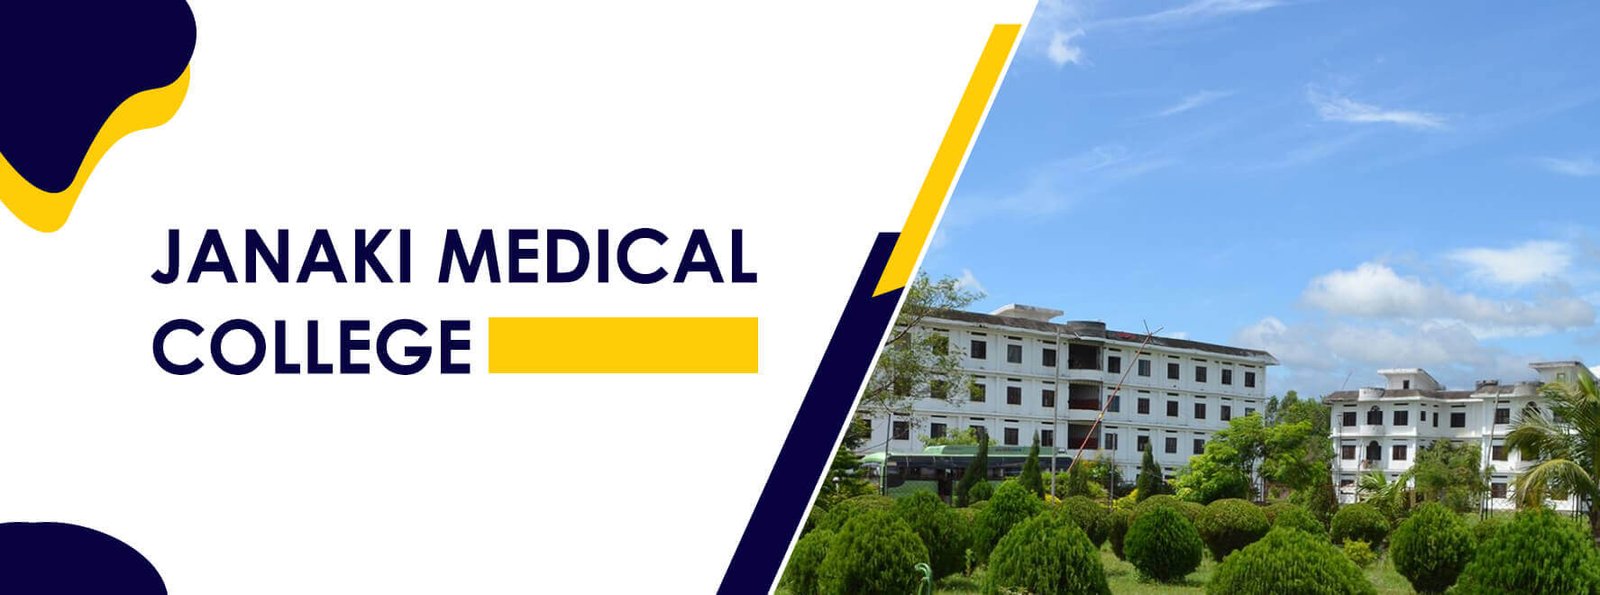 janaki medical college